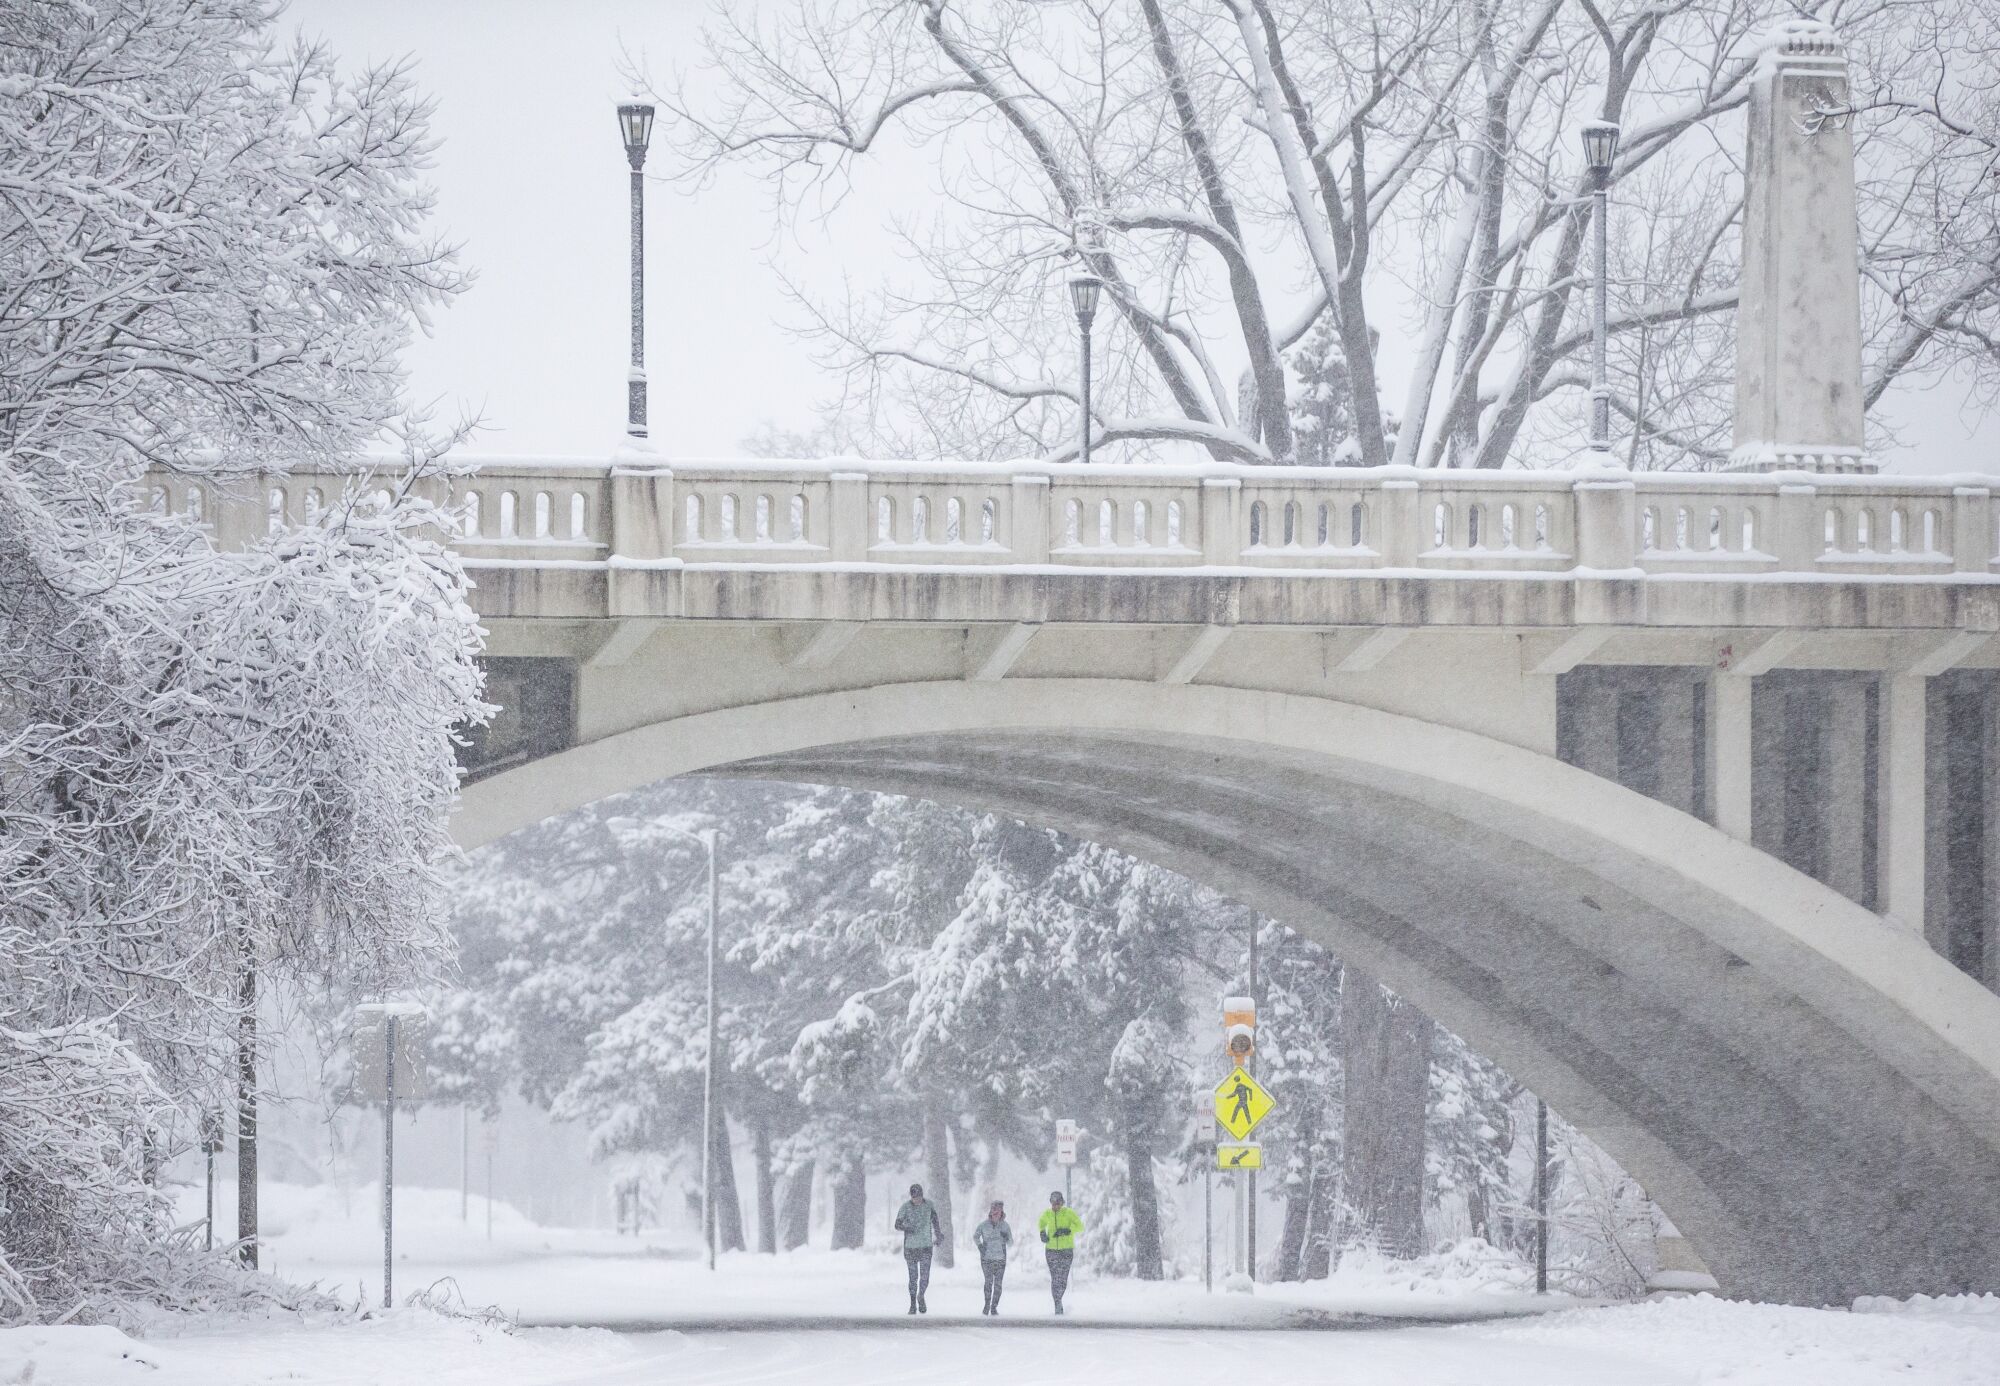 People jog under a bridge during a snowstorm